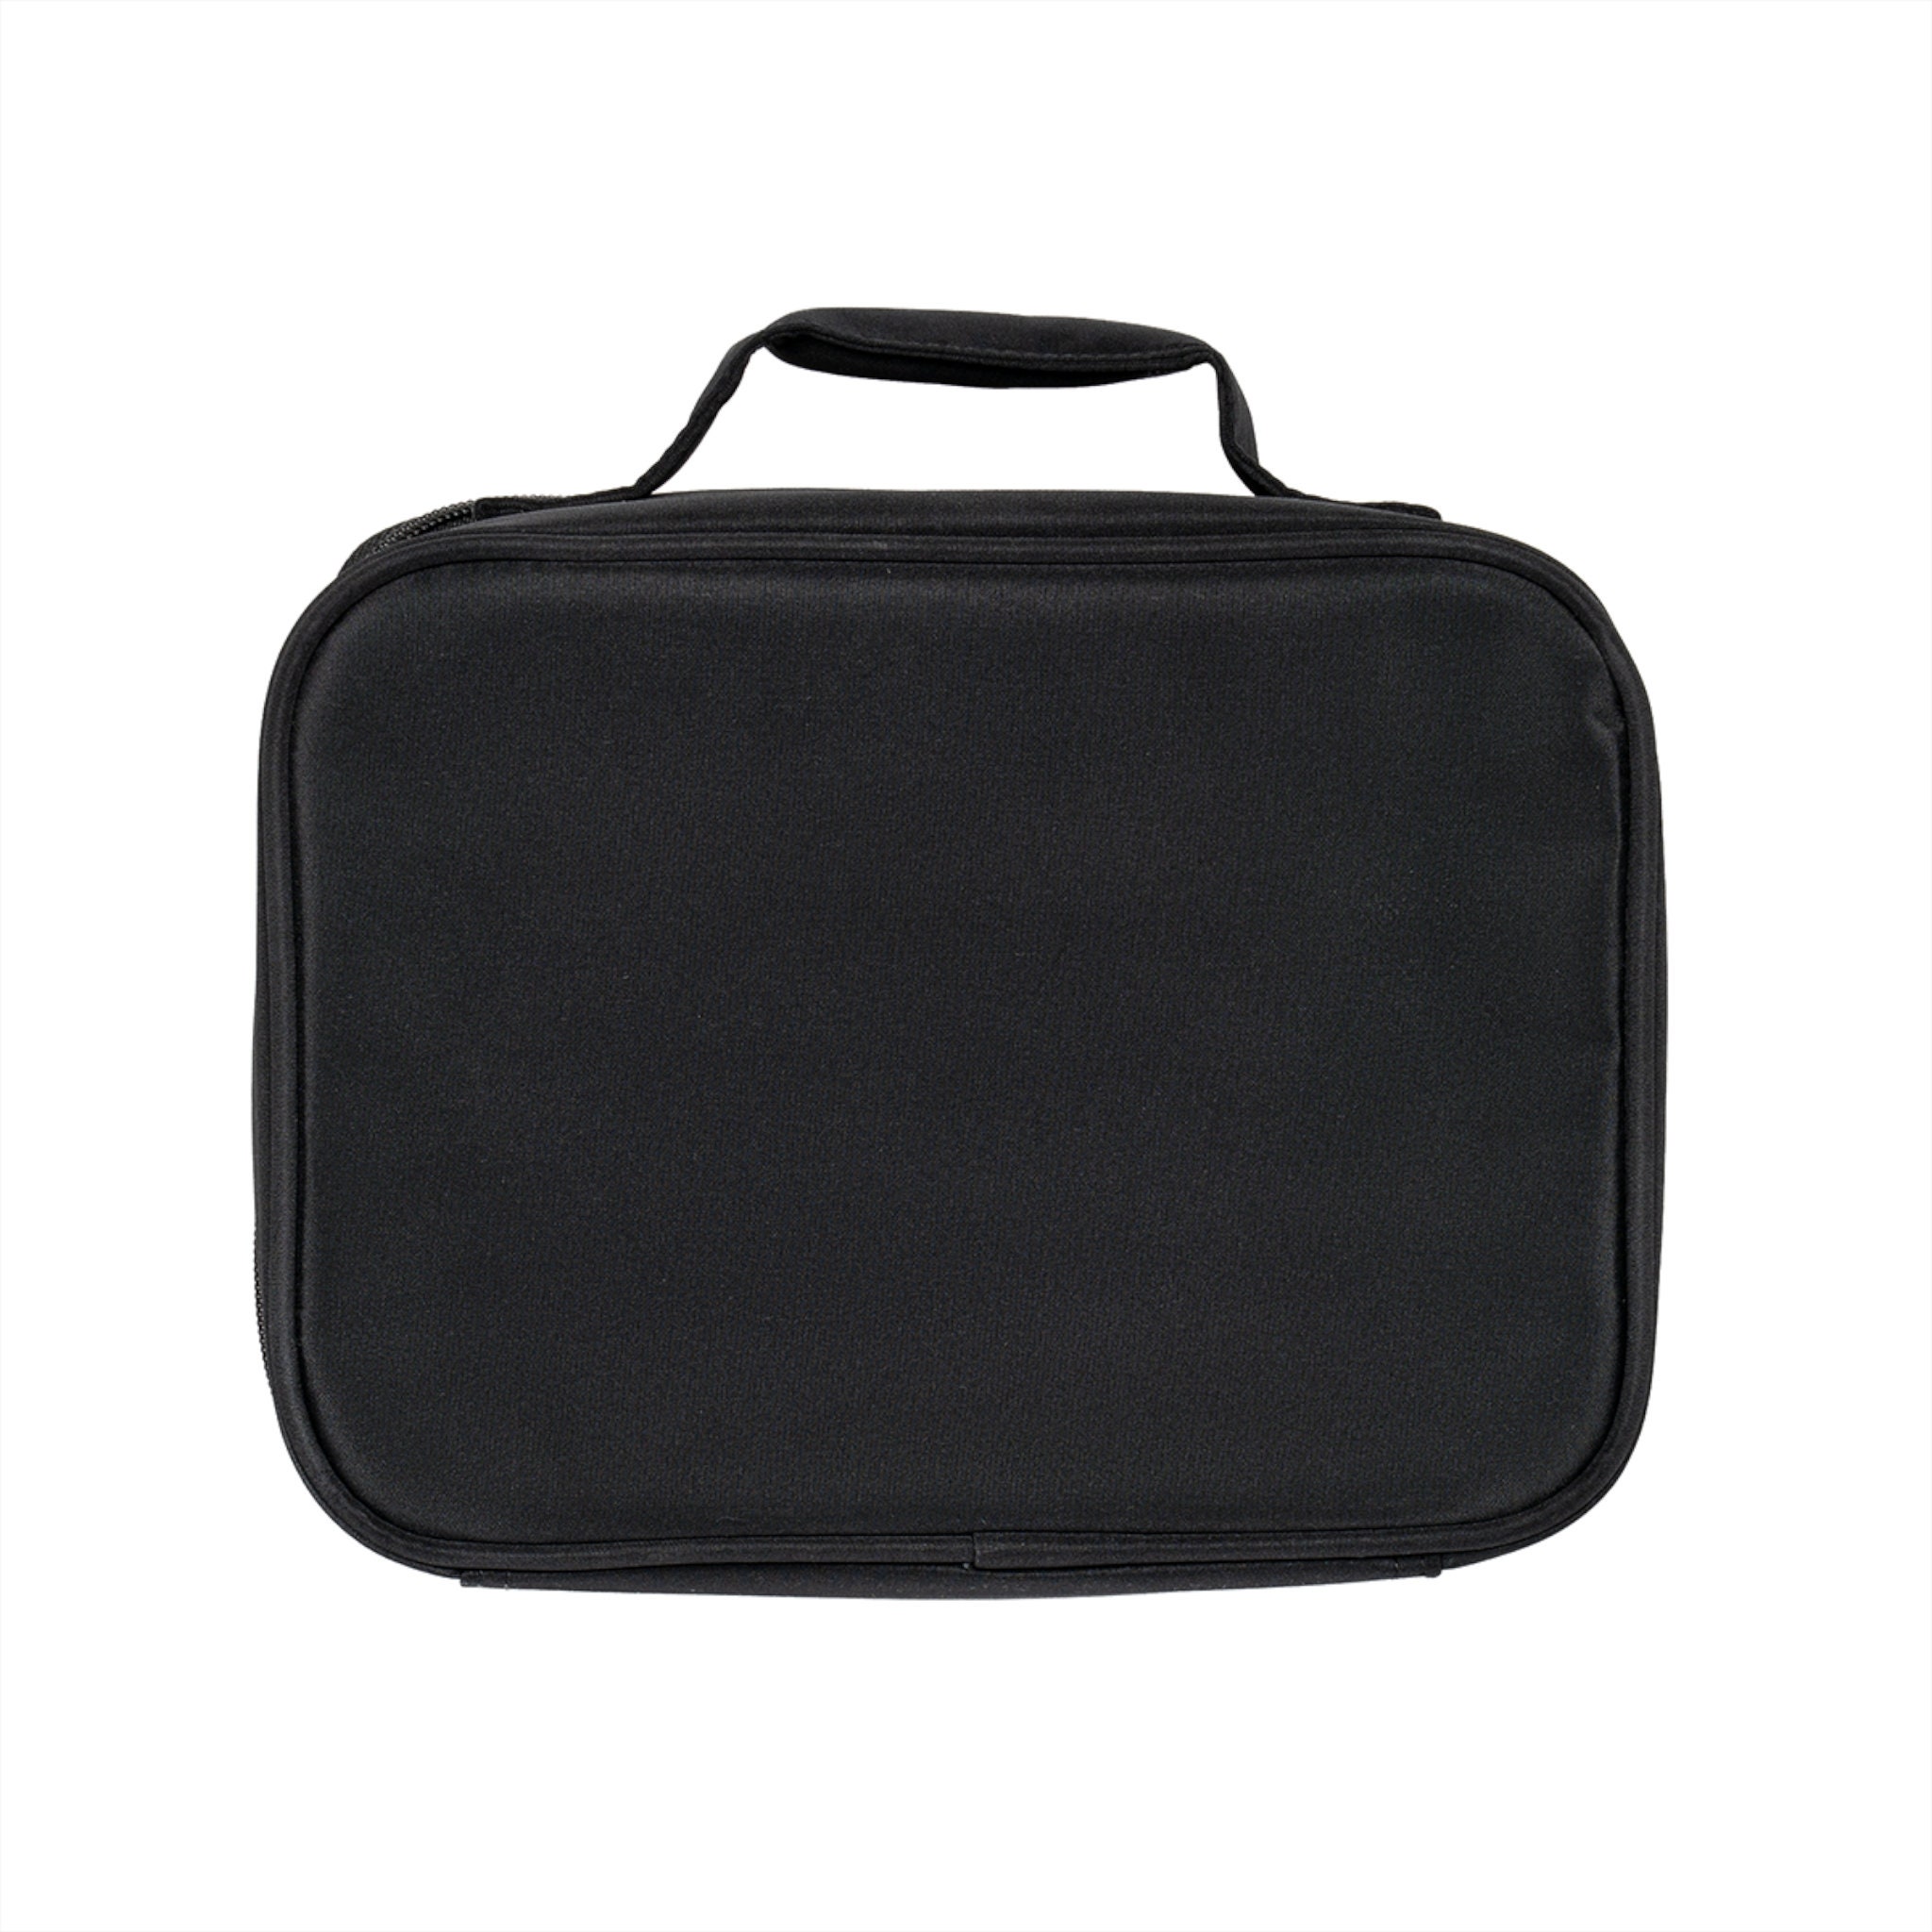 Bluey Neoprene Lunch Bag, Lunch Box - Inspire Uplift